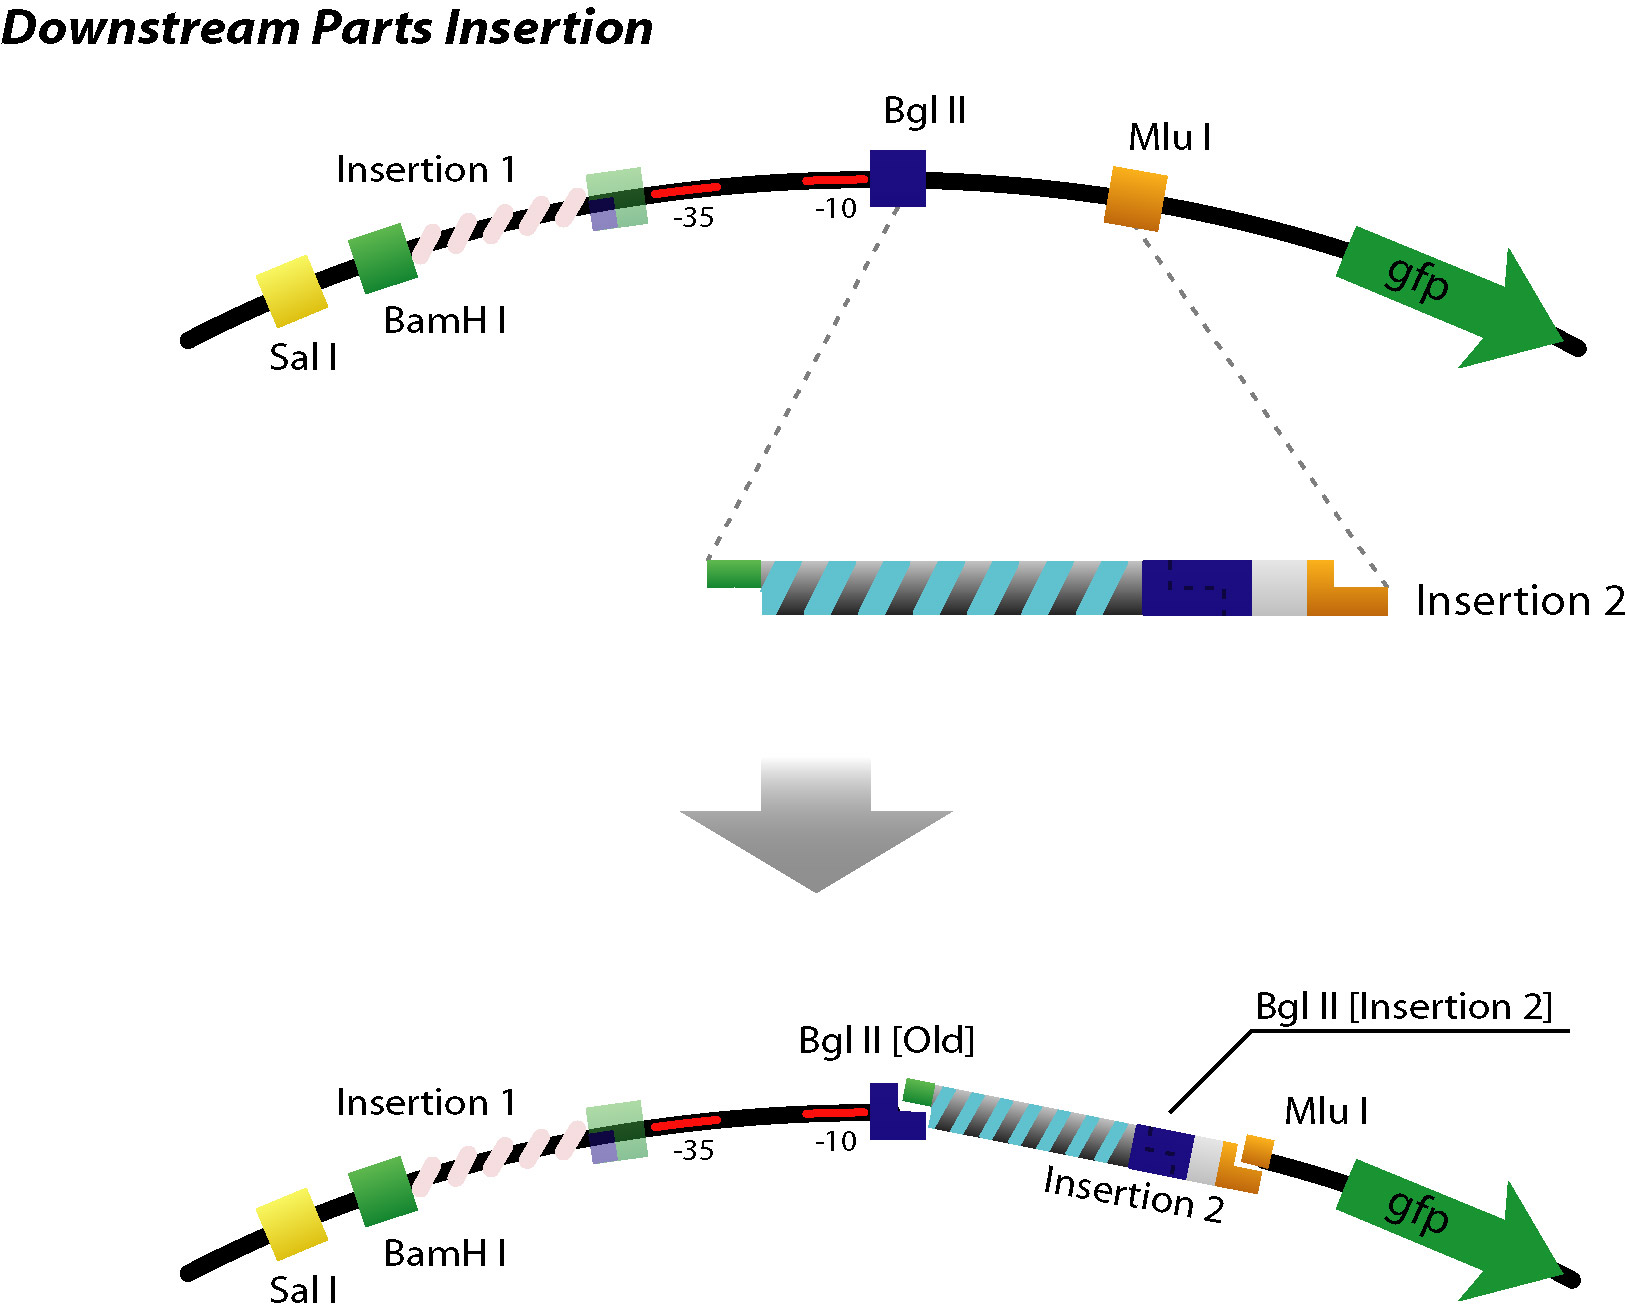 Downstream Parts Insertion